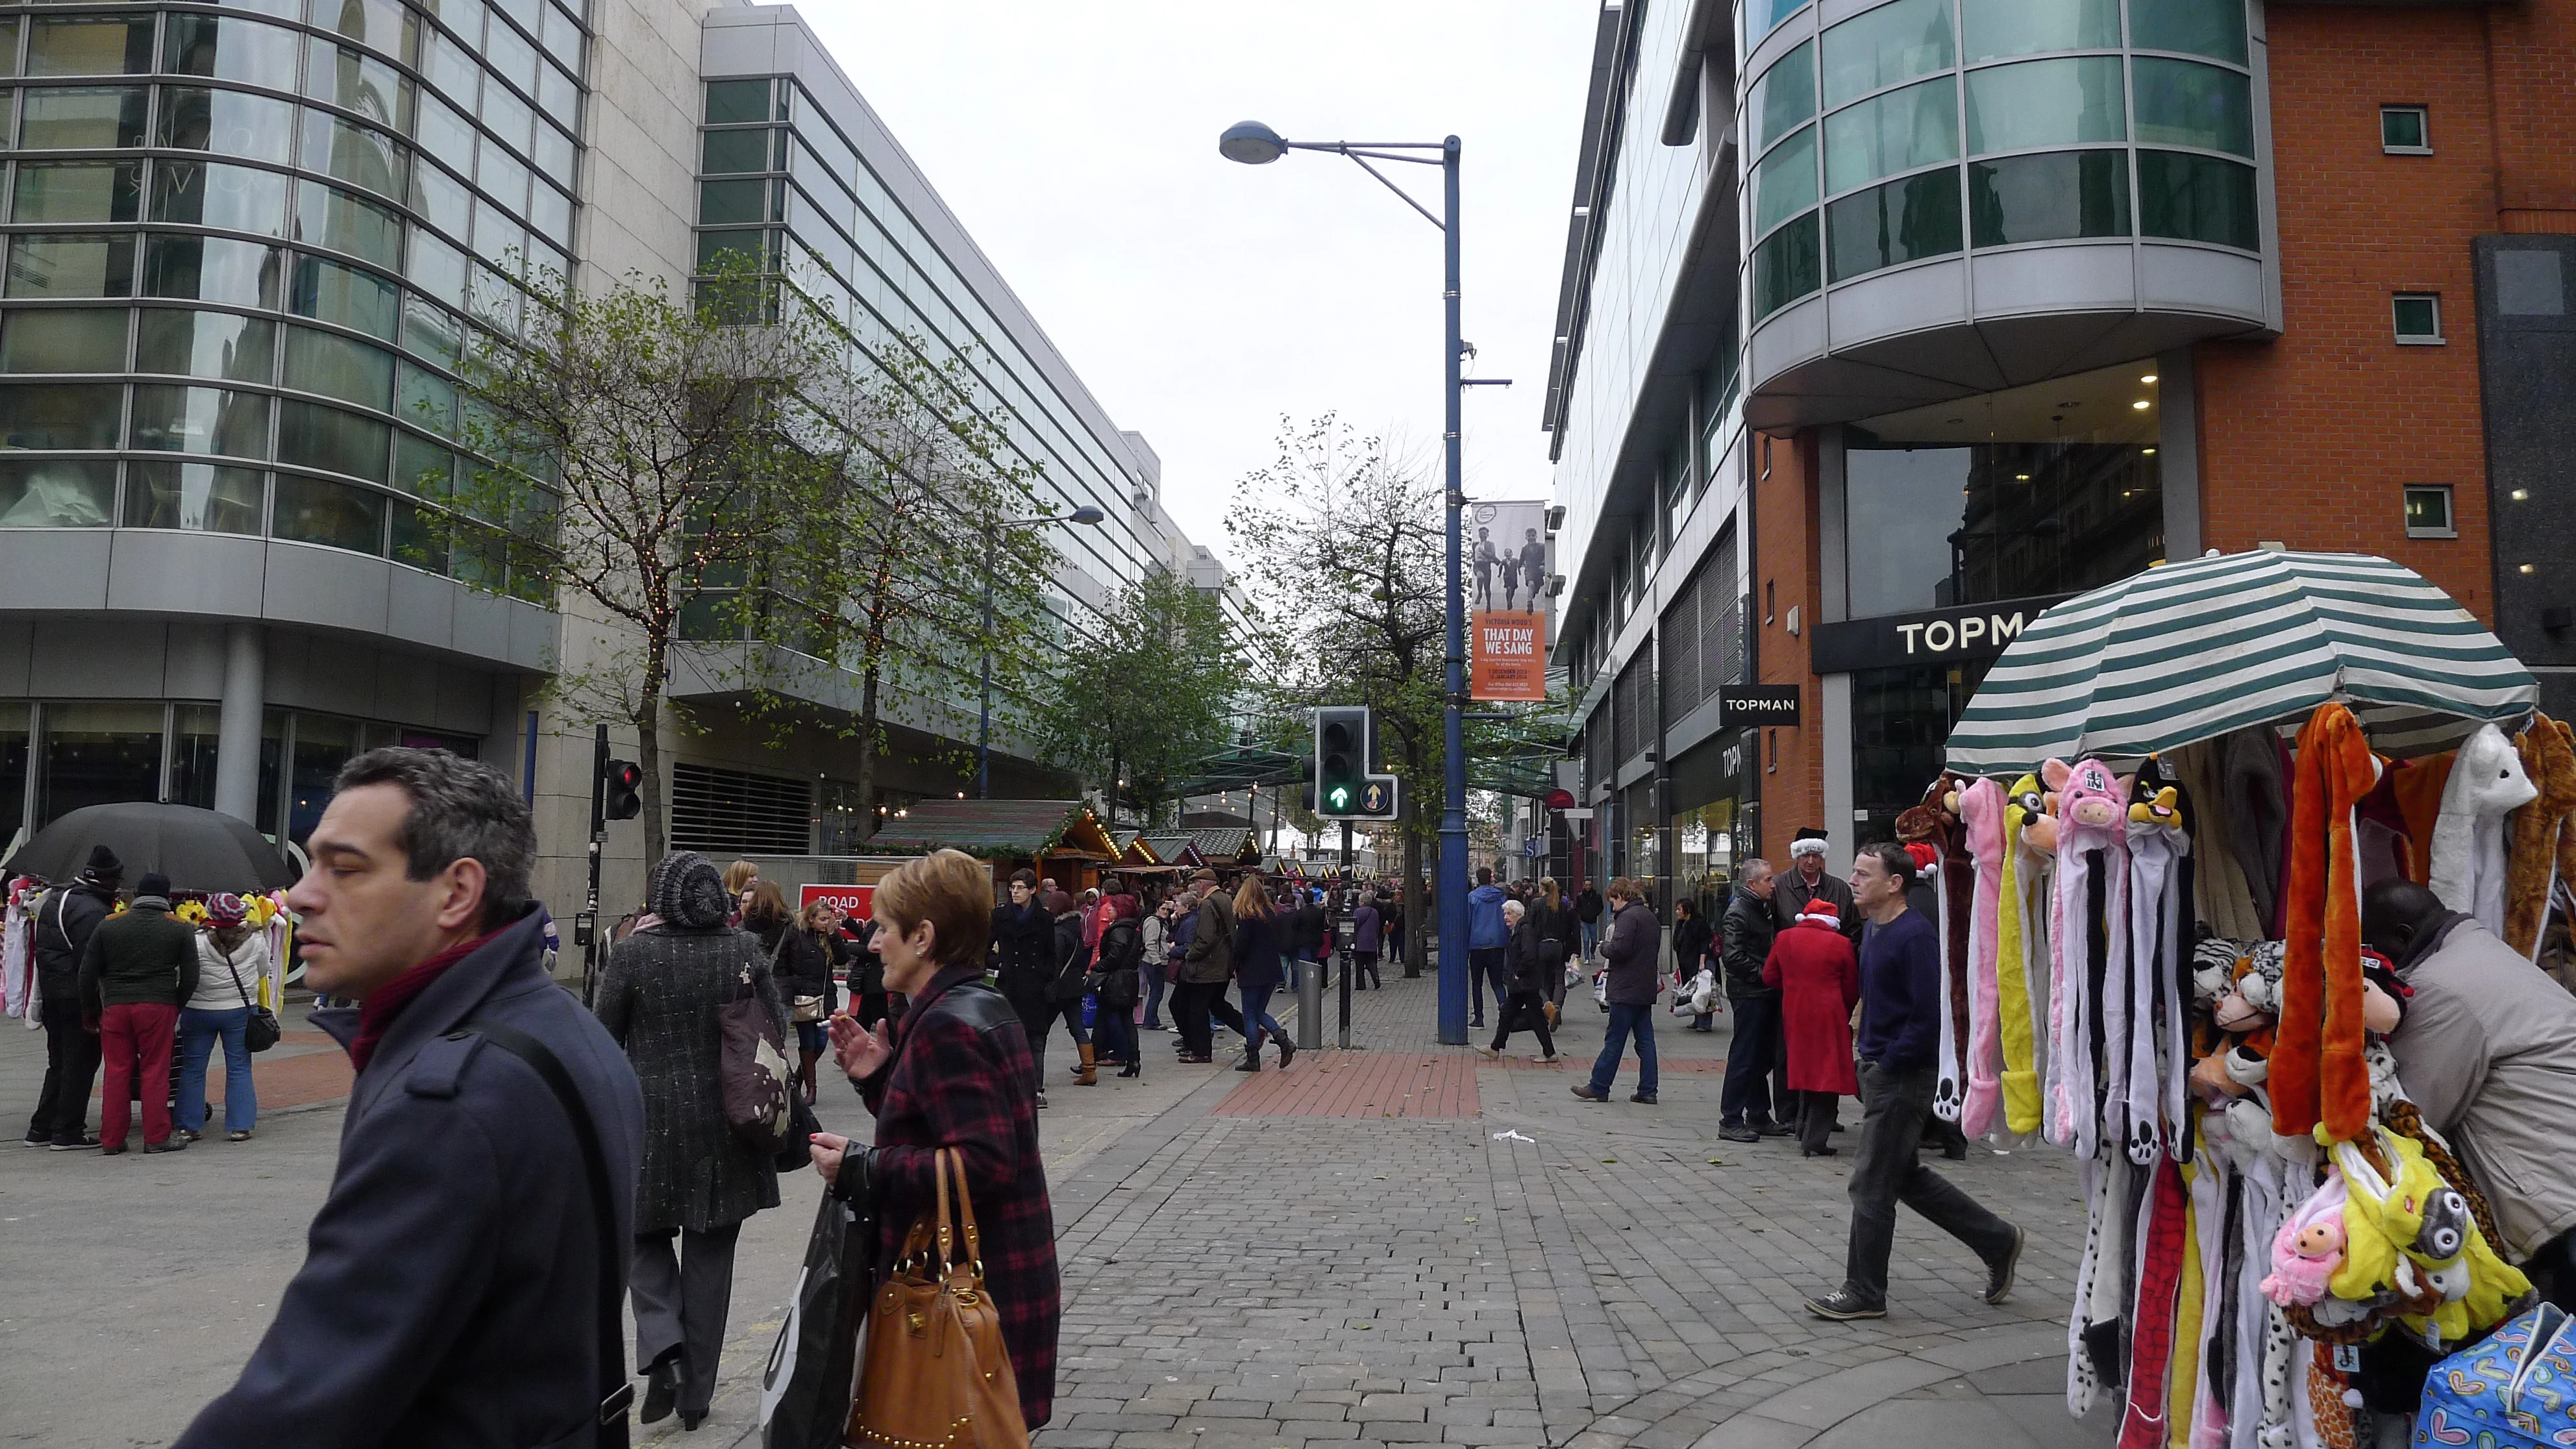 Market Street, Manchester, United Kingdom